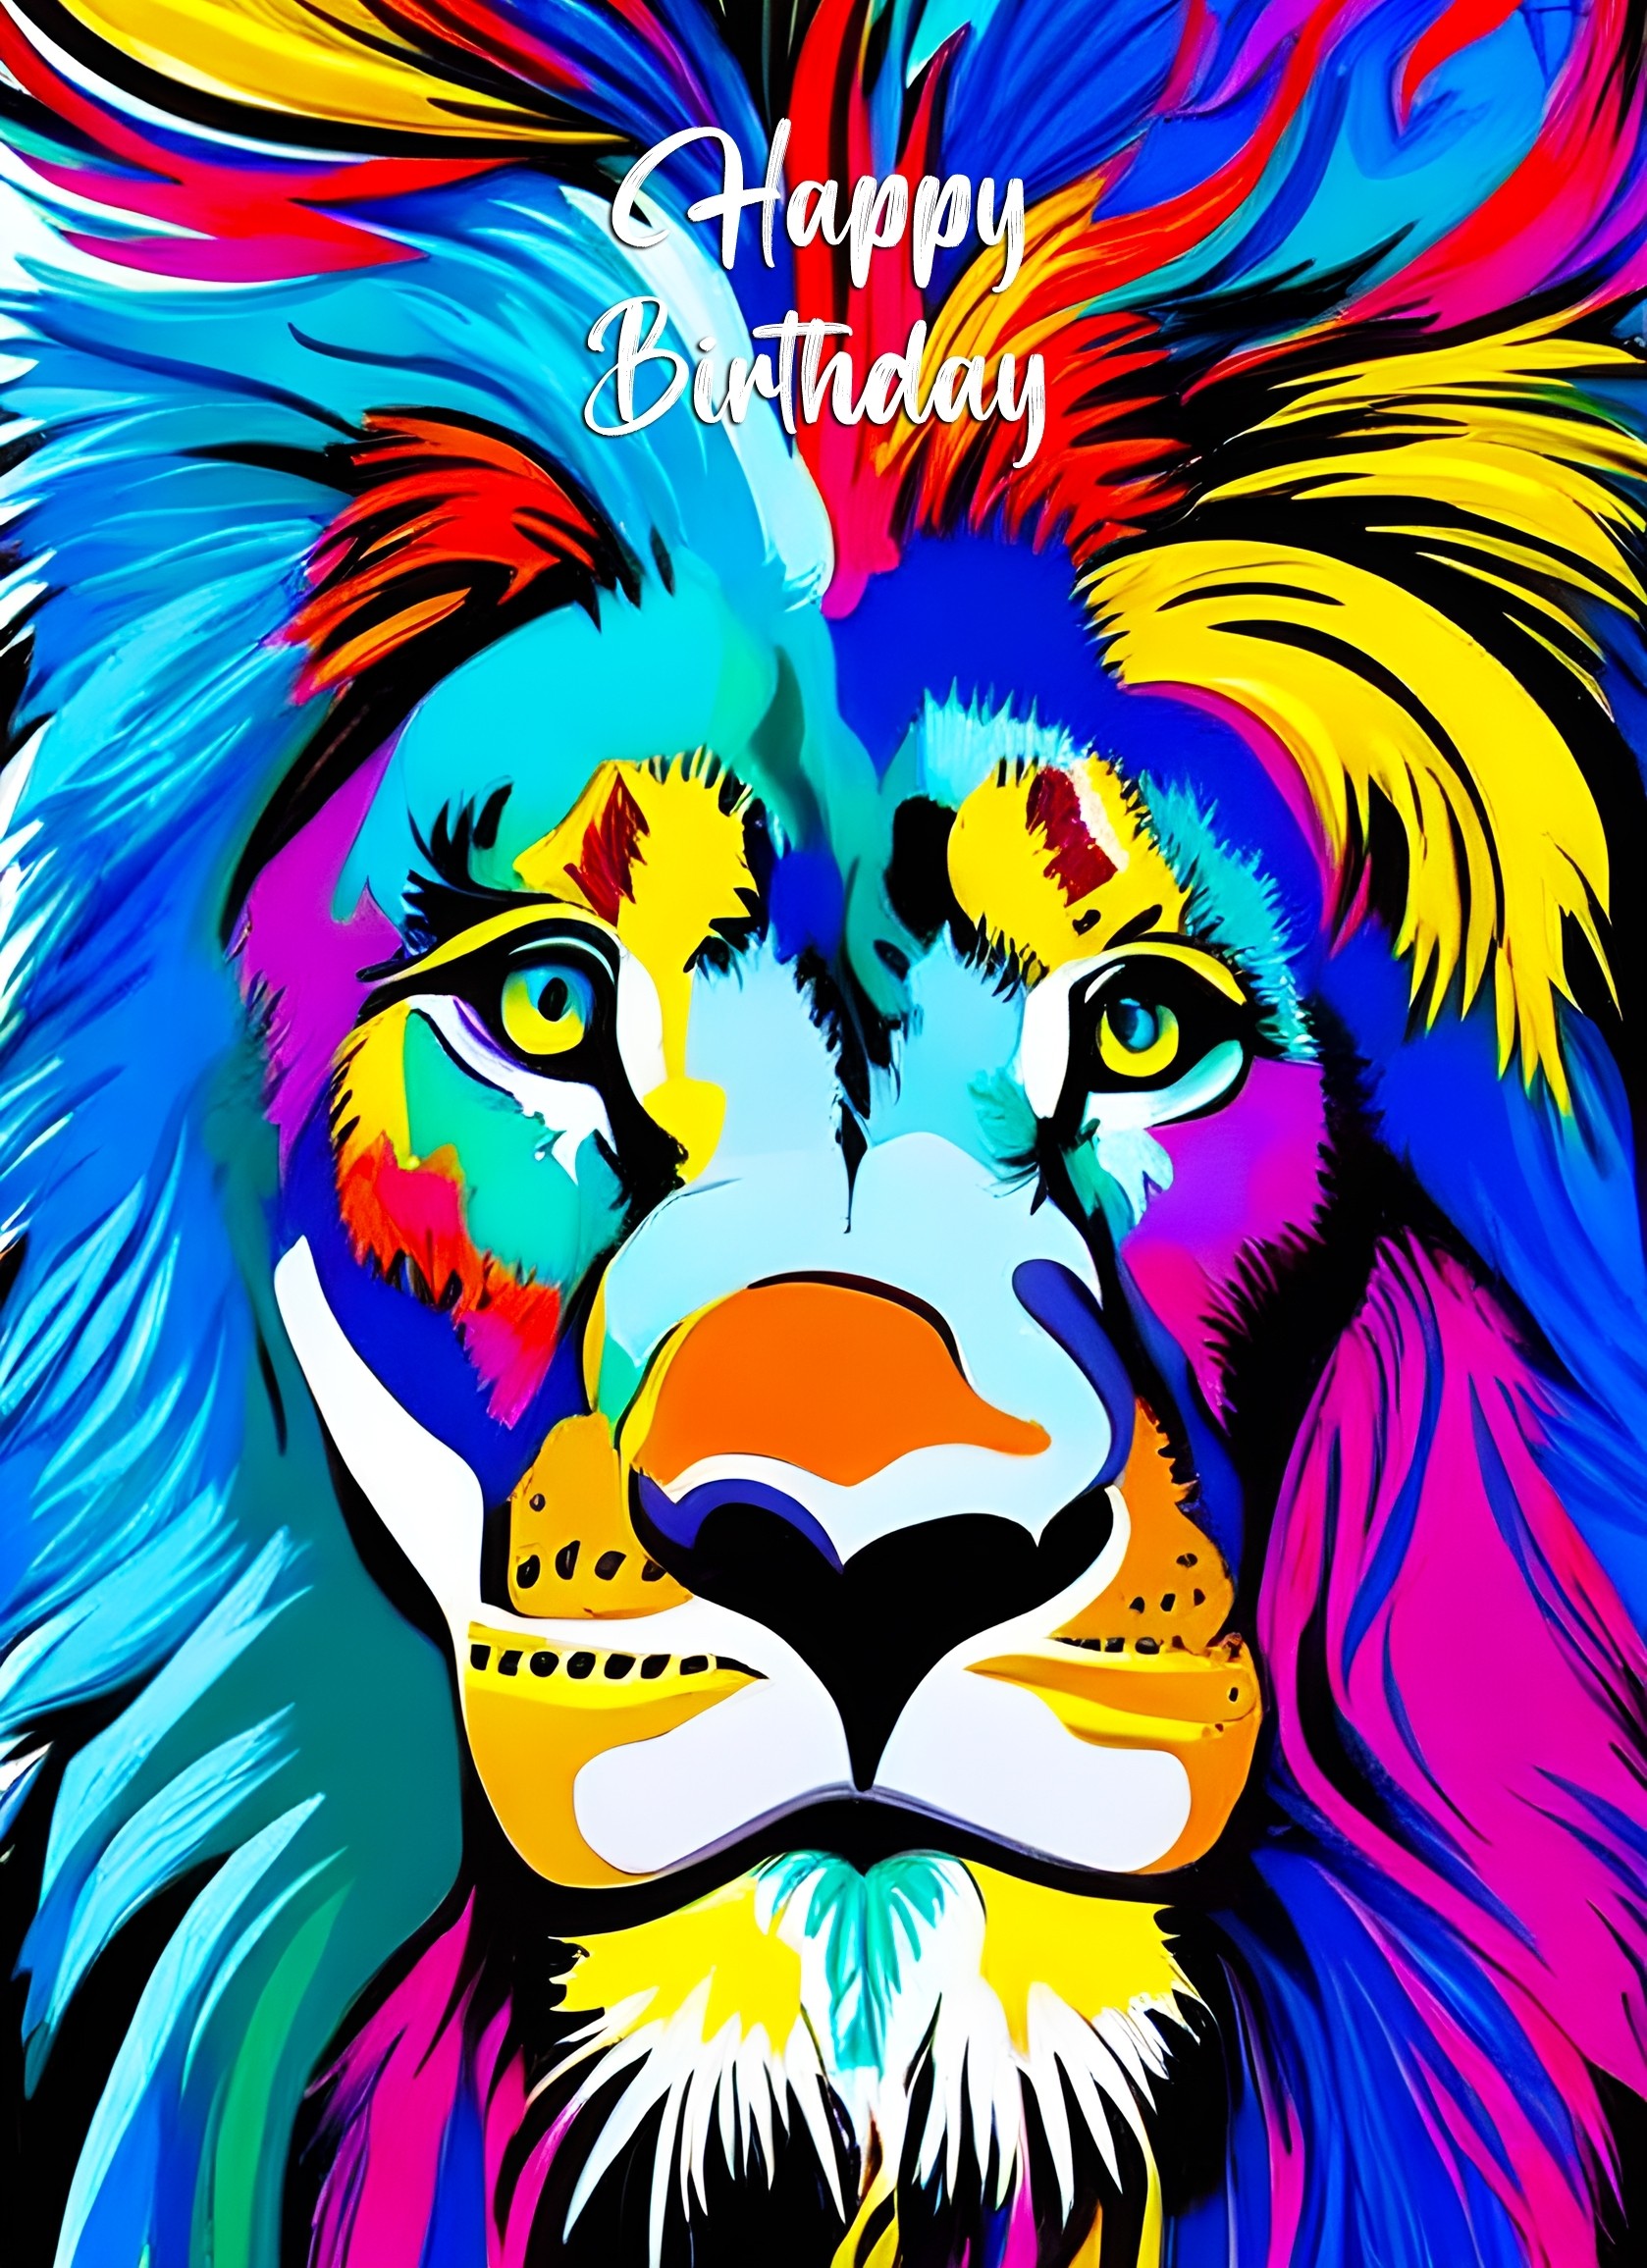 Lion Animal Colourful Abstract Art Birthday Card